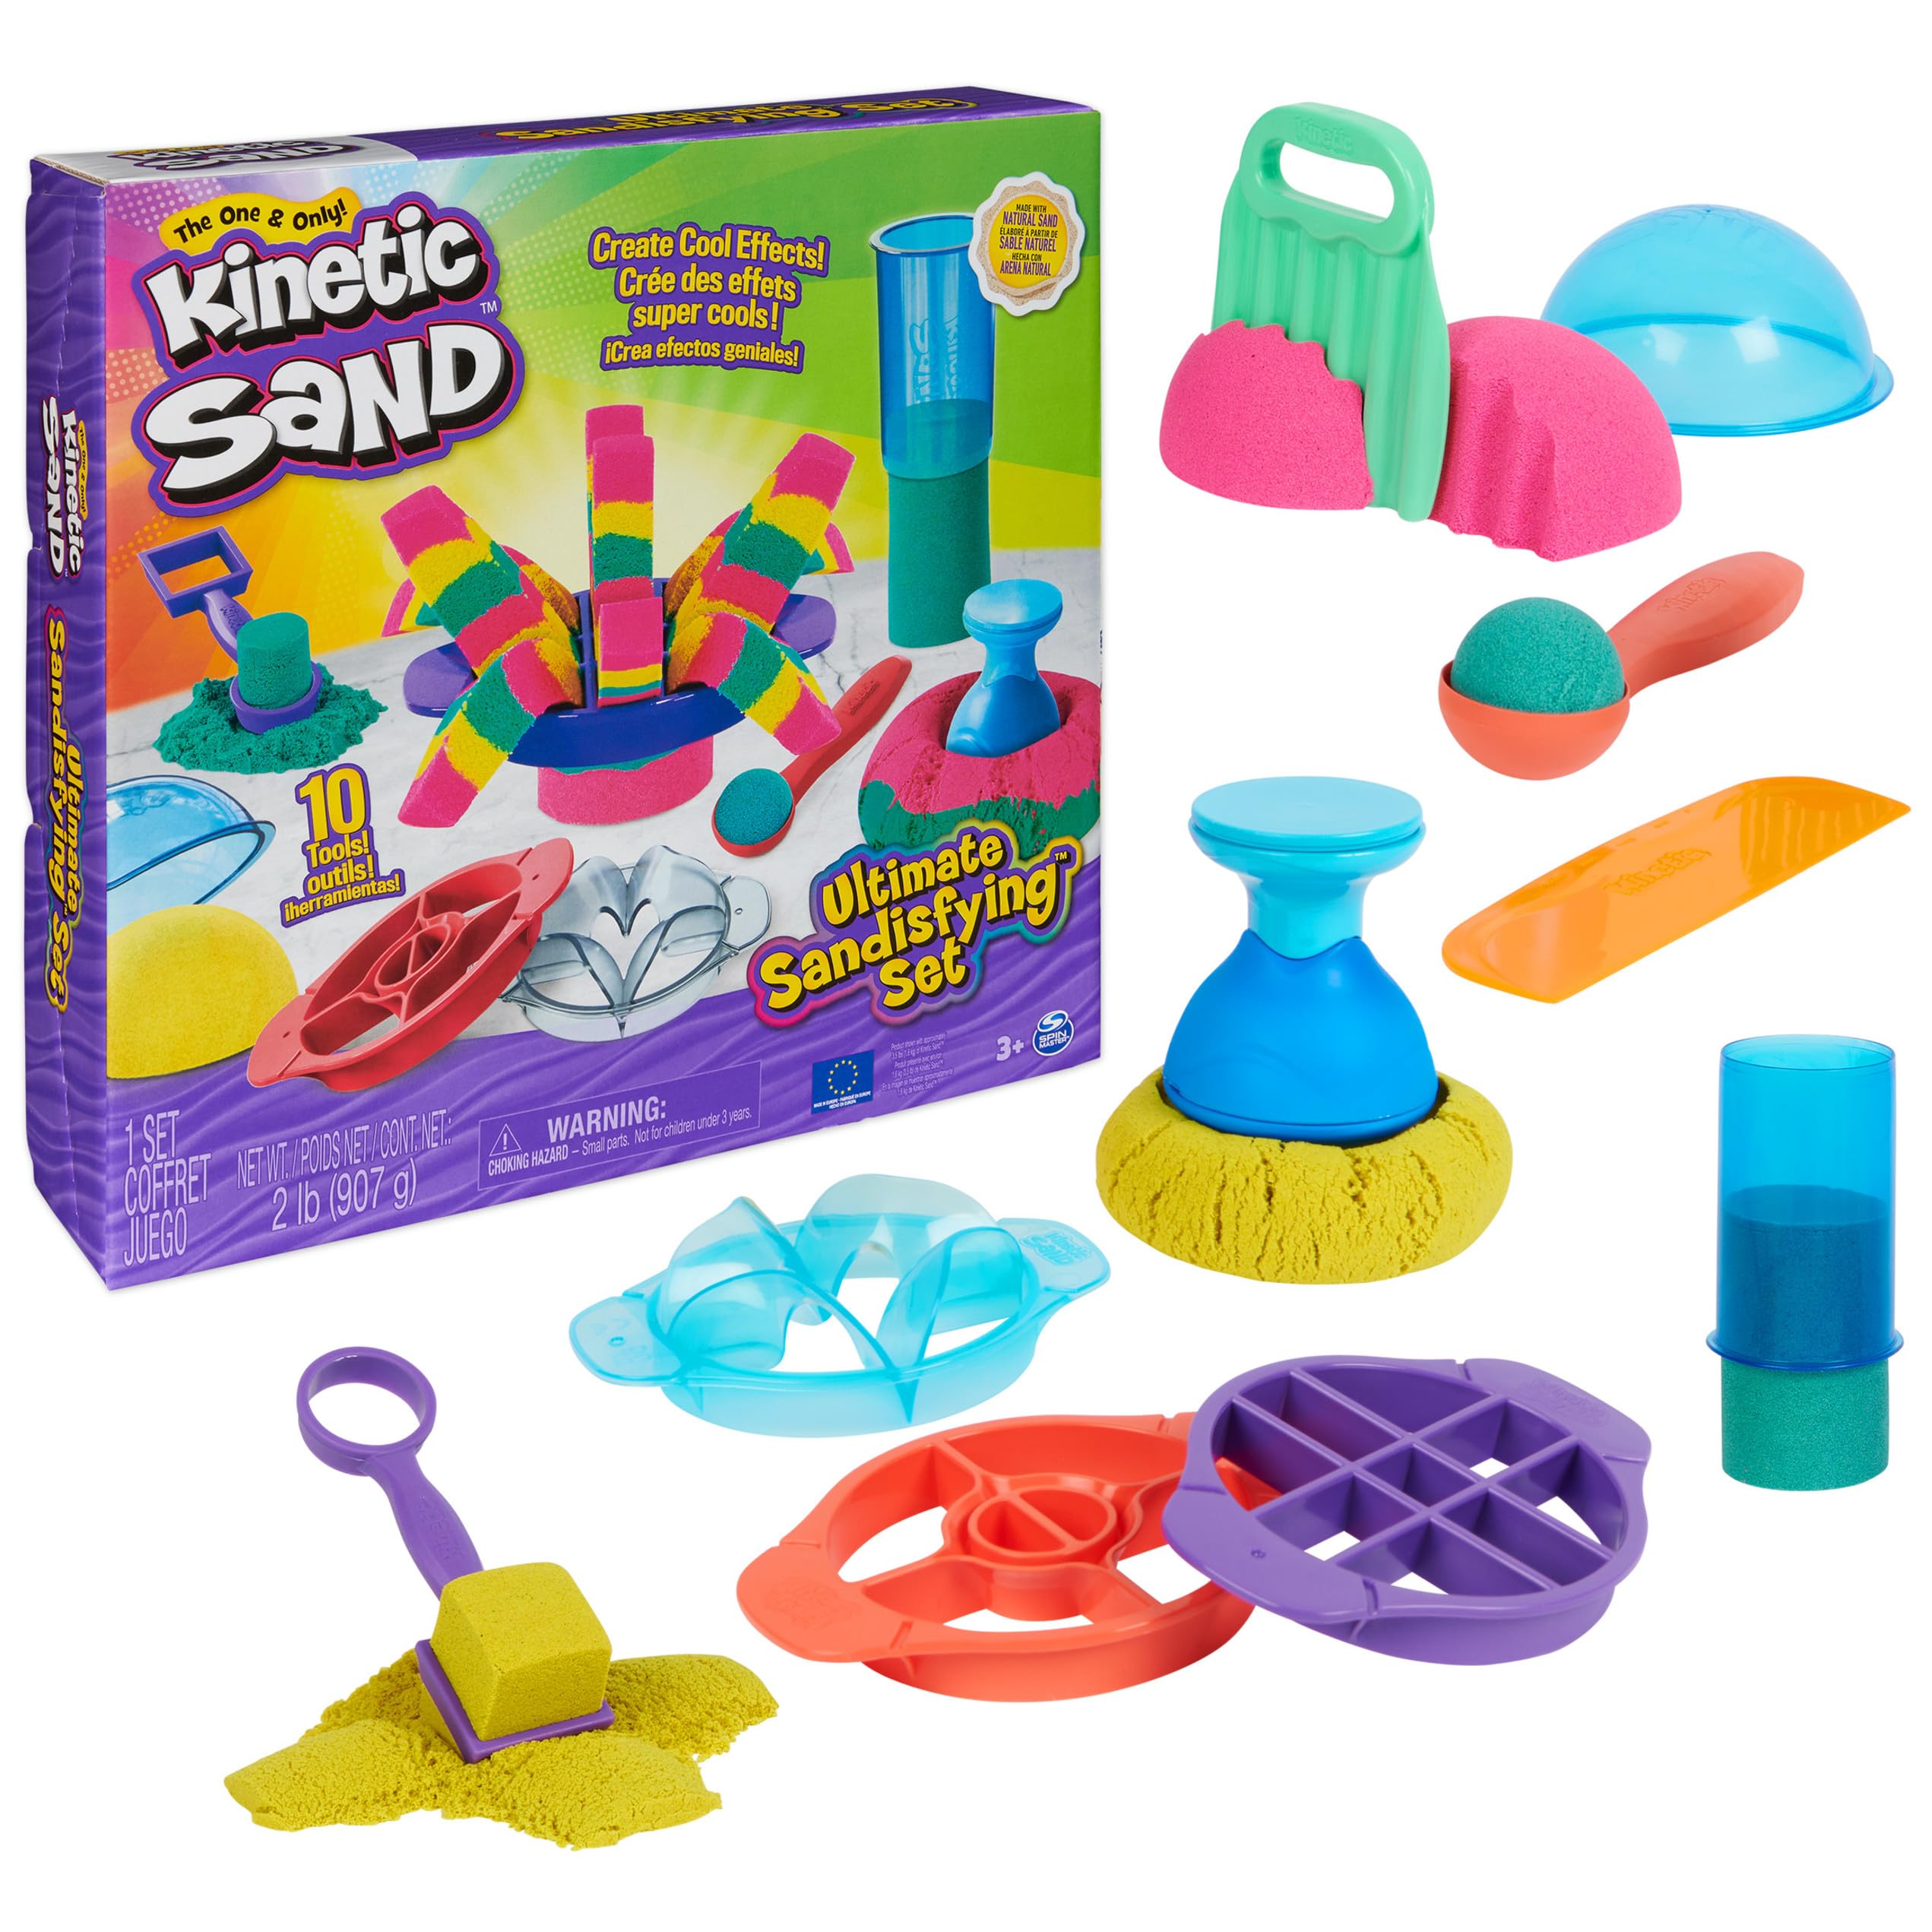 Kinetic Sand Ultimate Sandisfying Set, 2lb of Pink, Yellow and Teal Play Sand, 10 Molds and Tools, Sensory Toys, Christmas Gifts for Kids